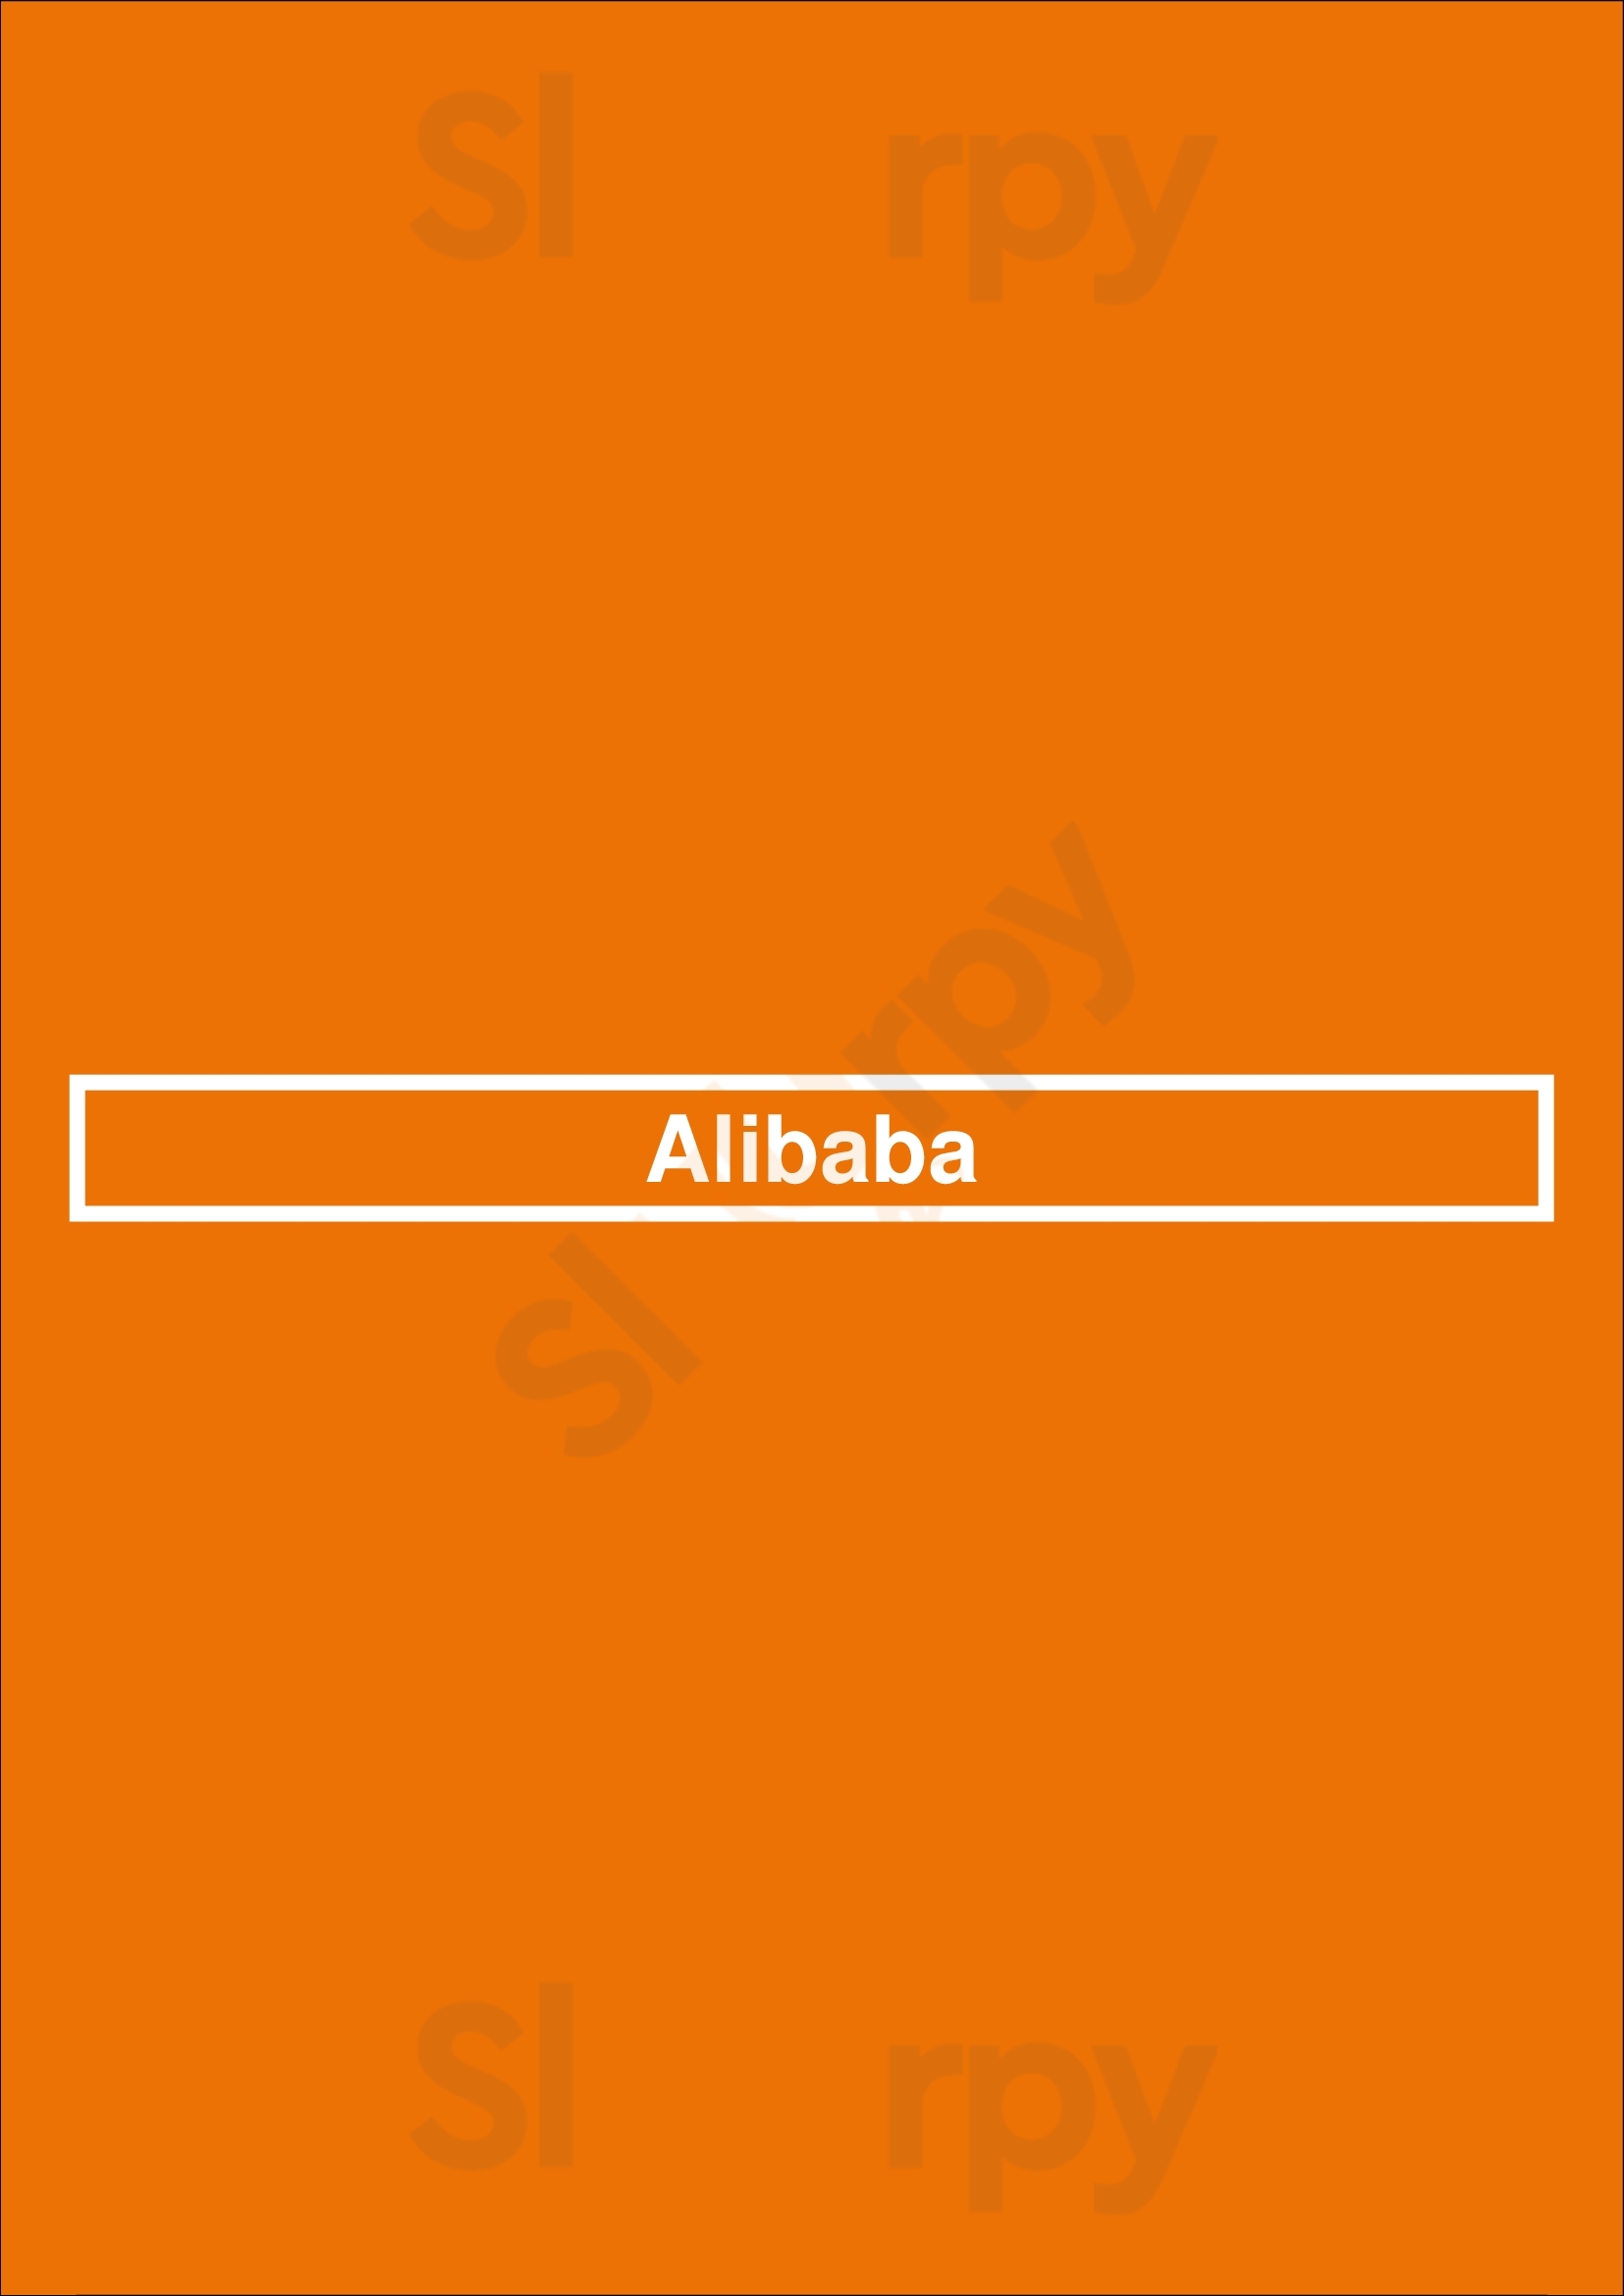 Alibaba Appingedam Menu - 1